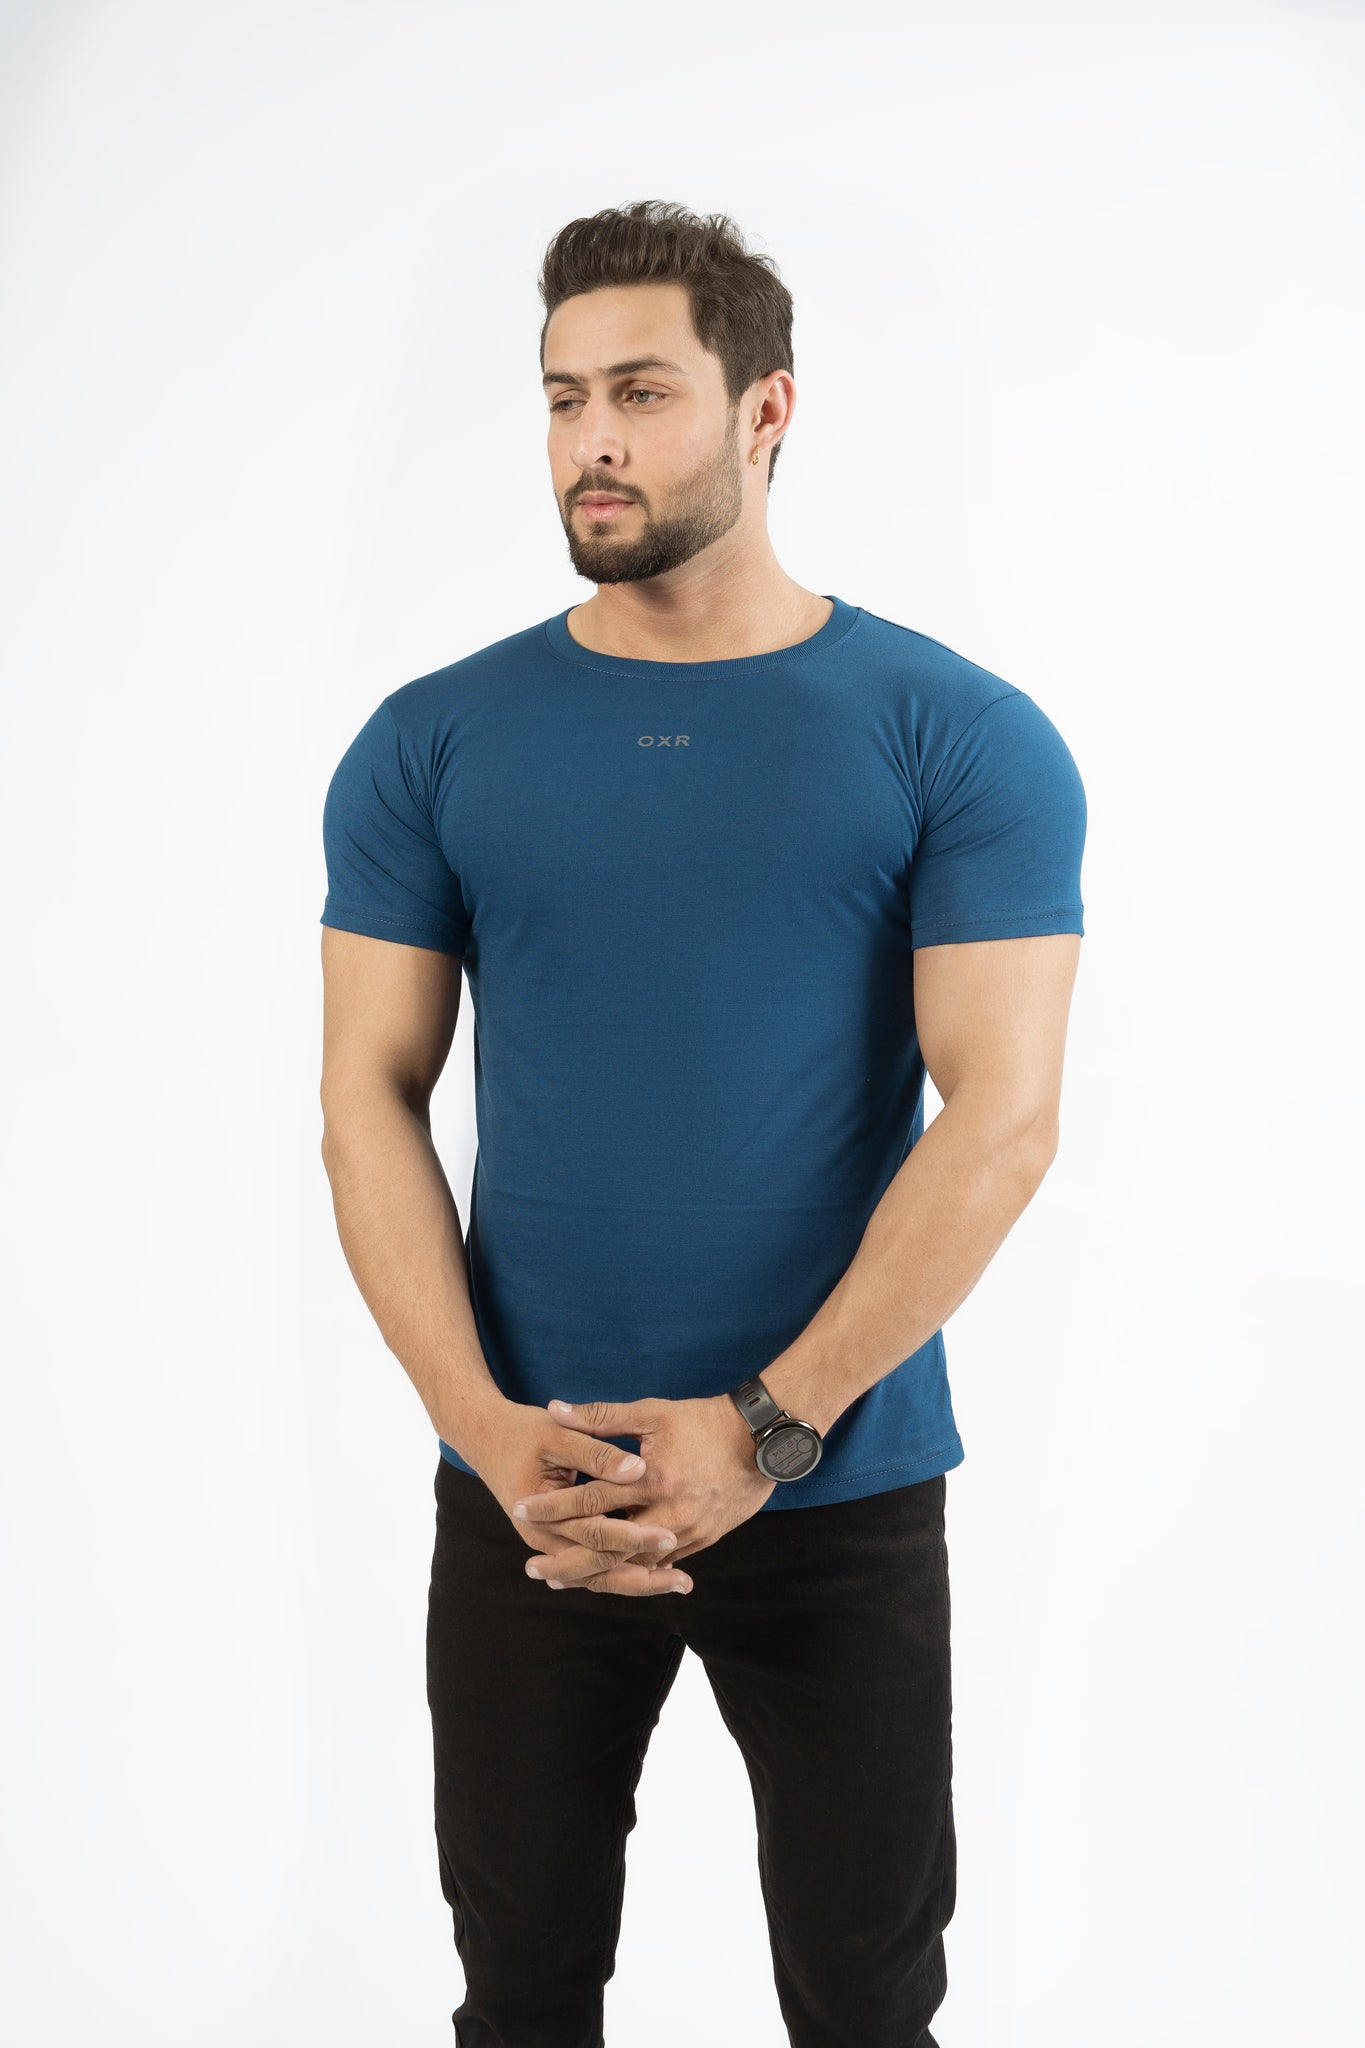 Petroleum Blue OXR T-Shirt